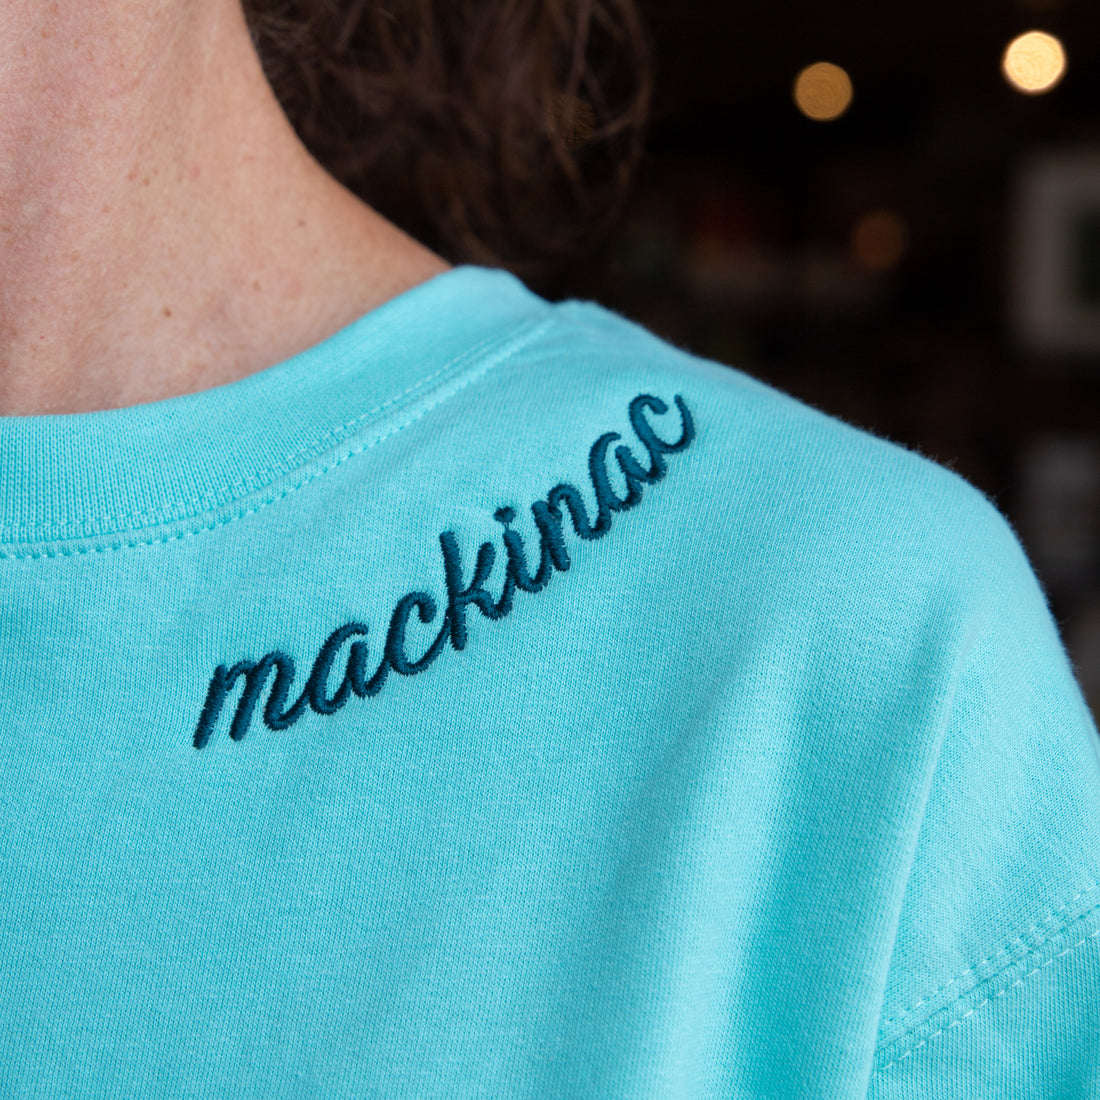 Mint Mackinac Embroidered Crewneck